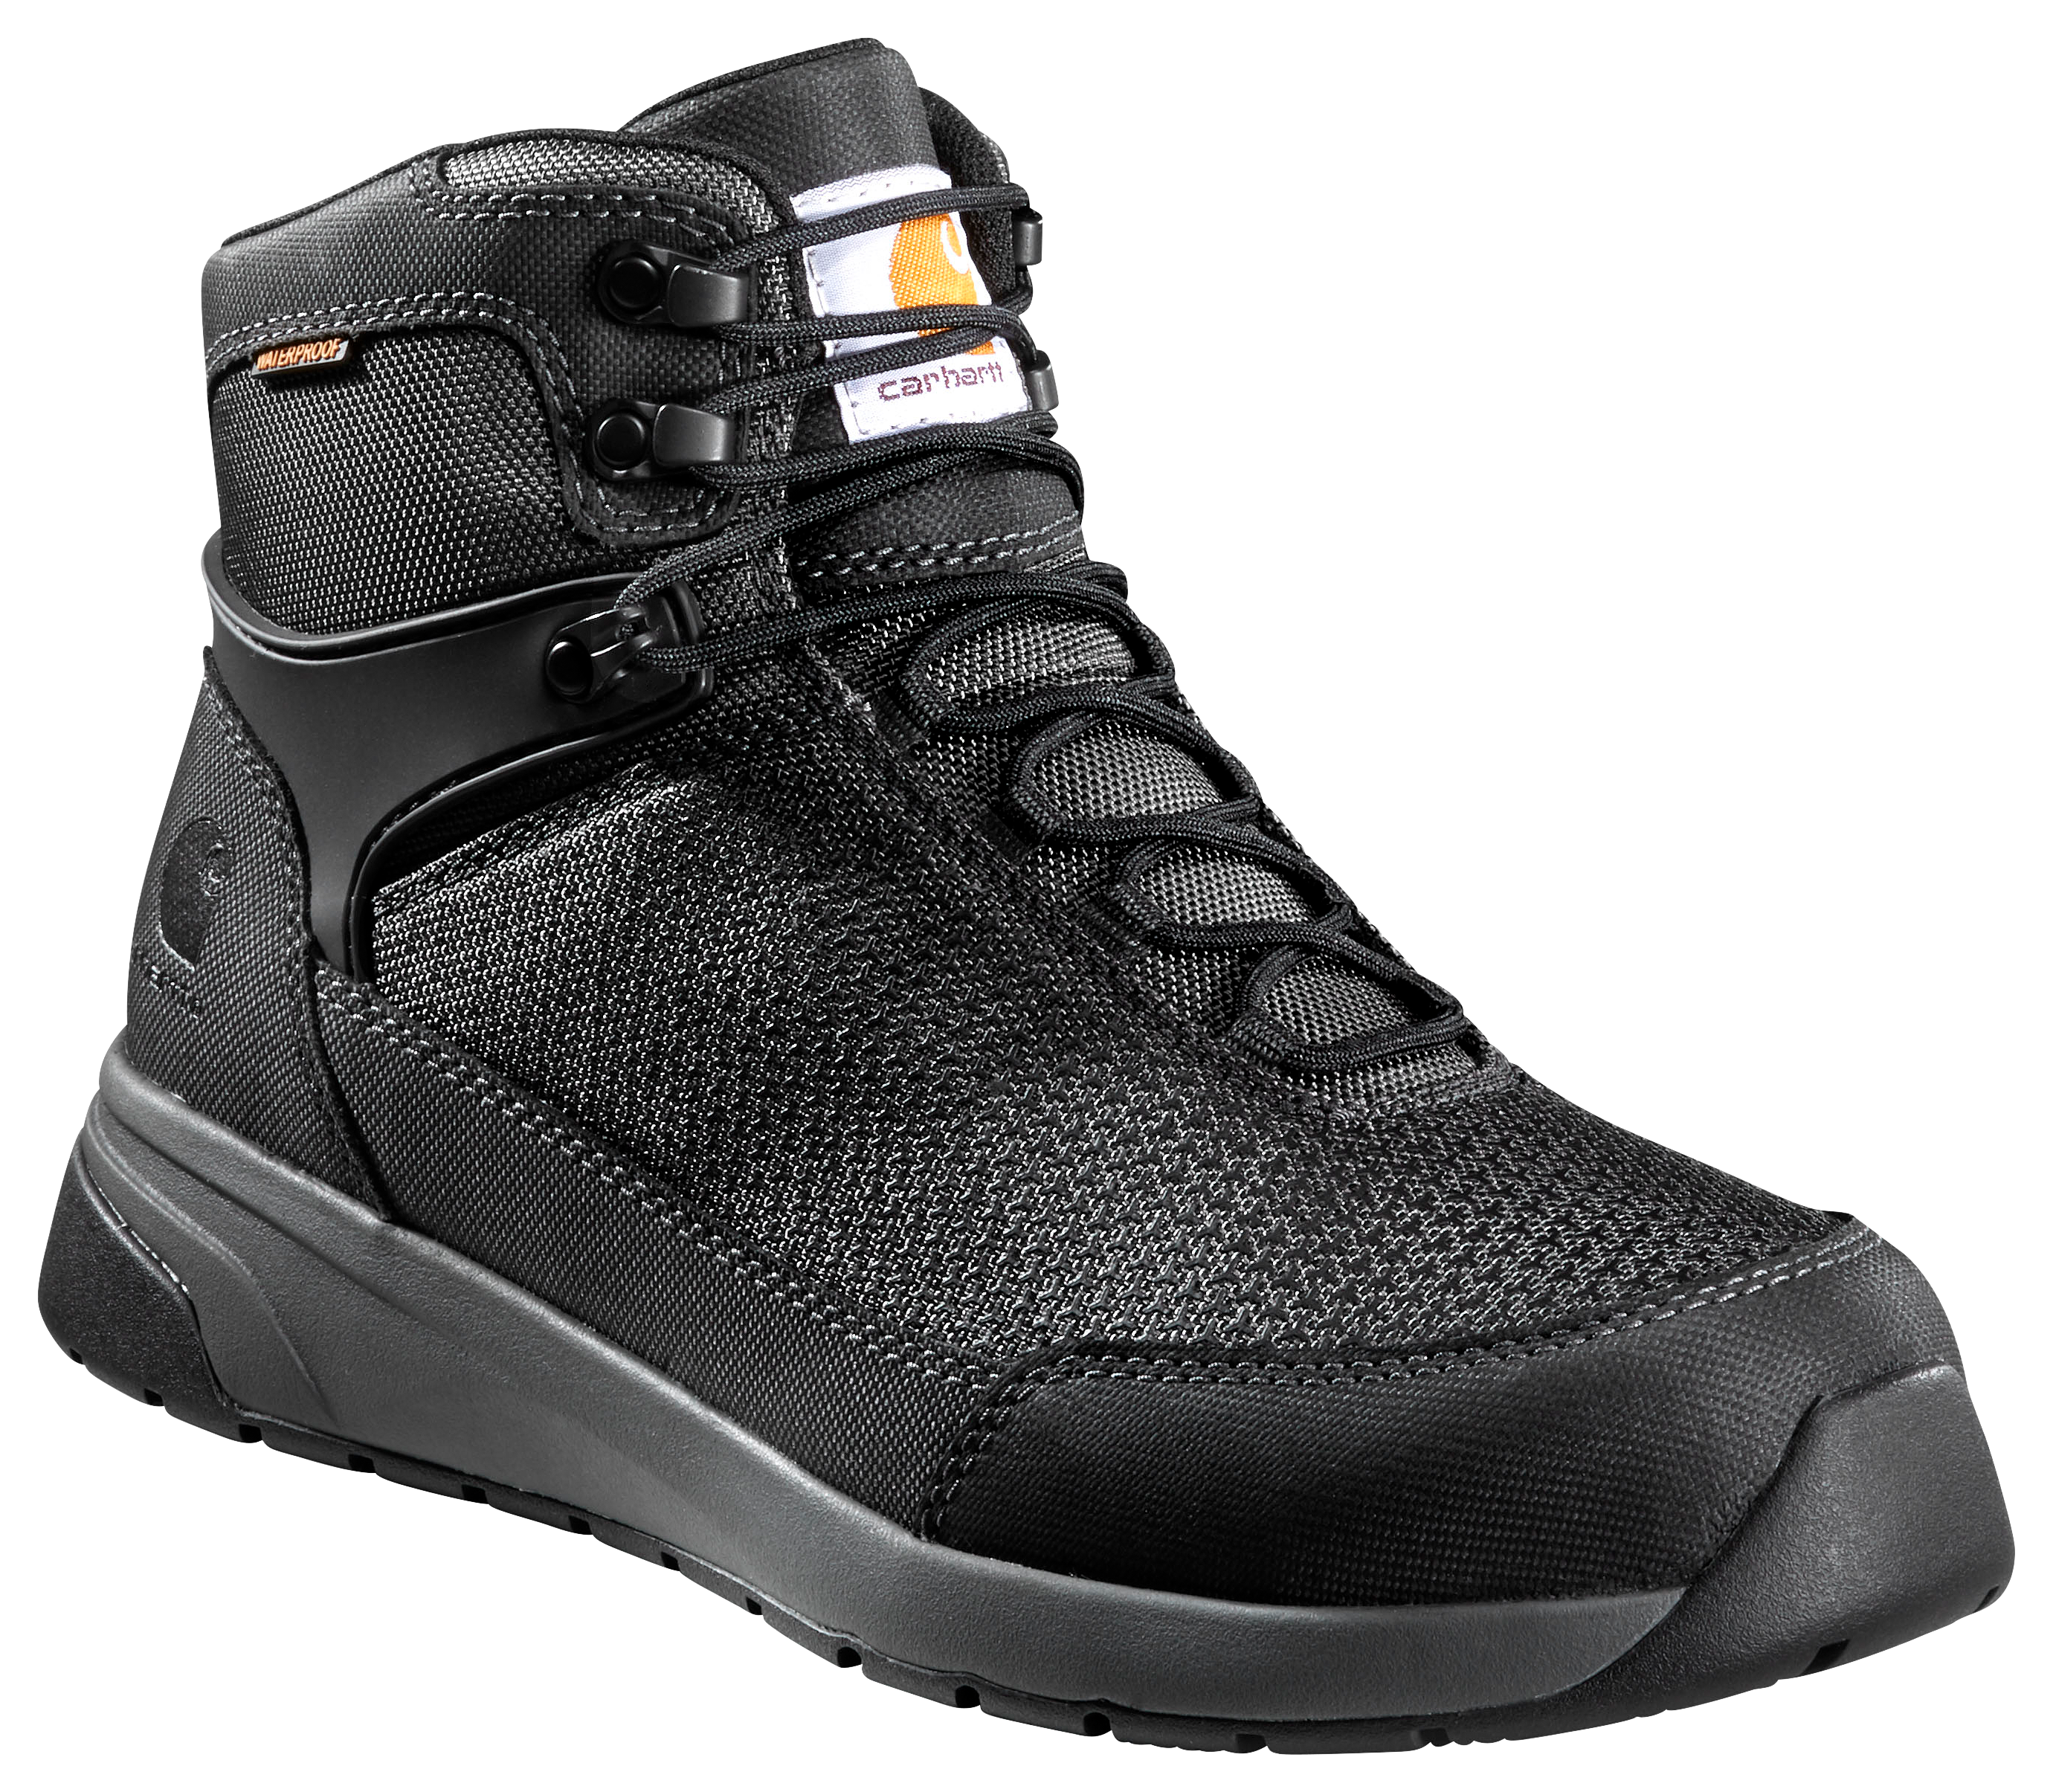 Carhartt Force 6"" Nano Composite-Toe Work Boots for Men - Black - 8.5M